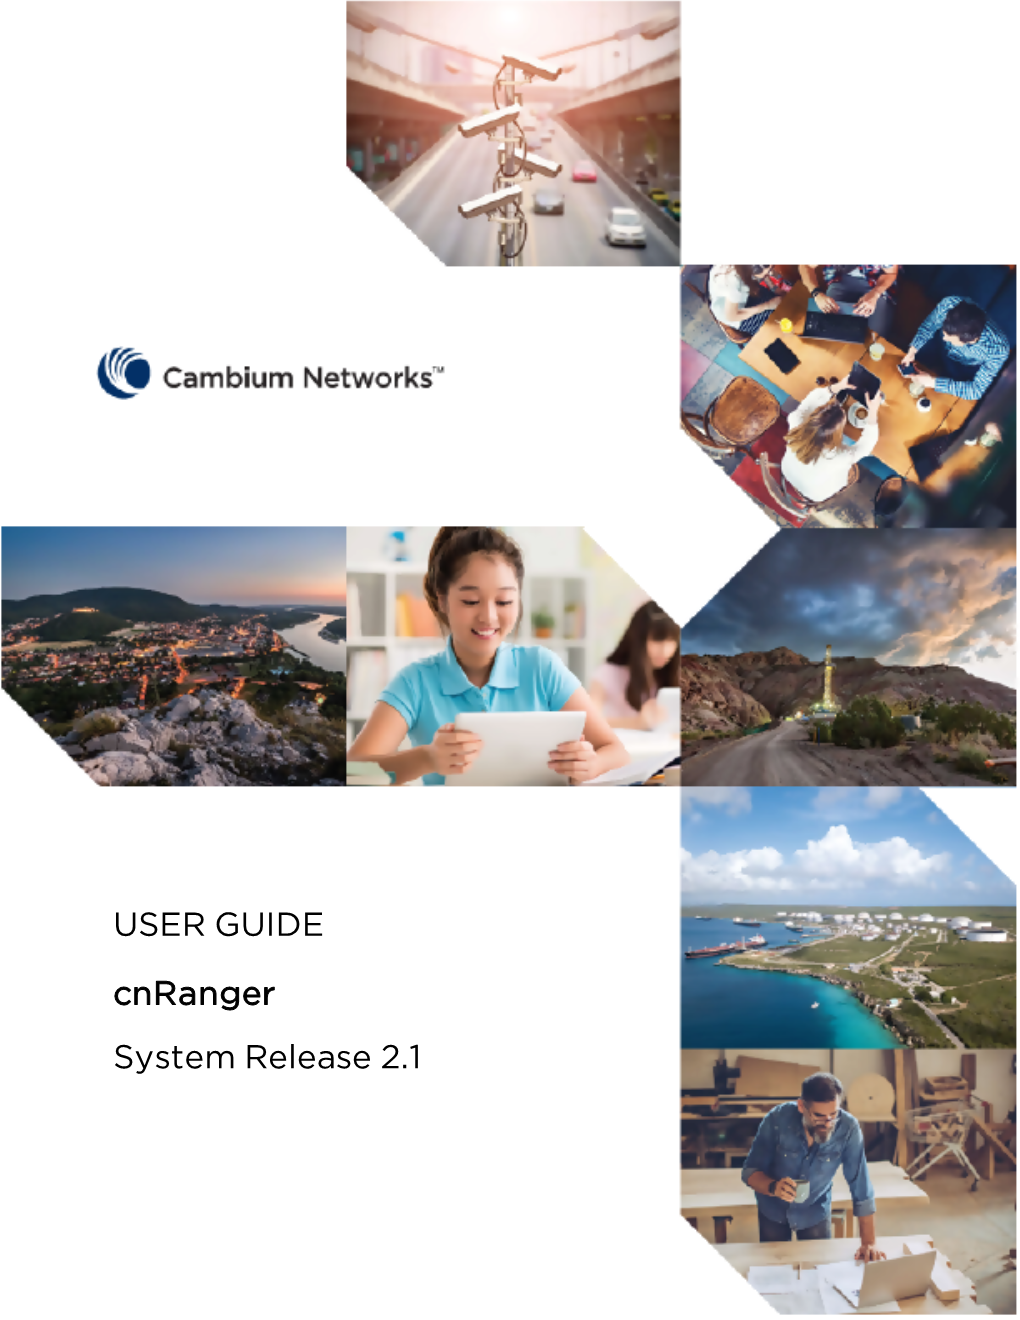 Cnranger User Guide System Release